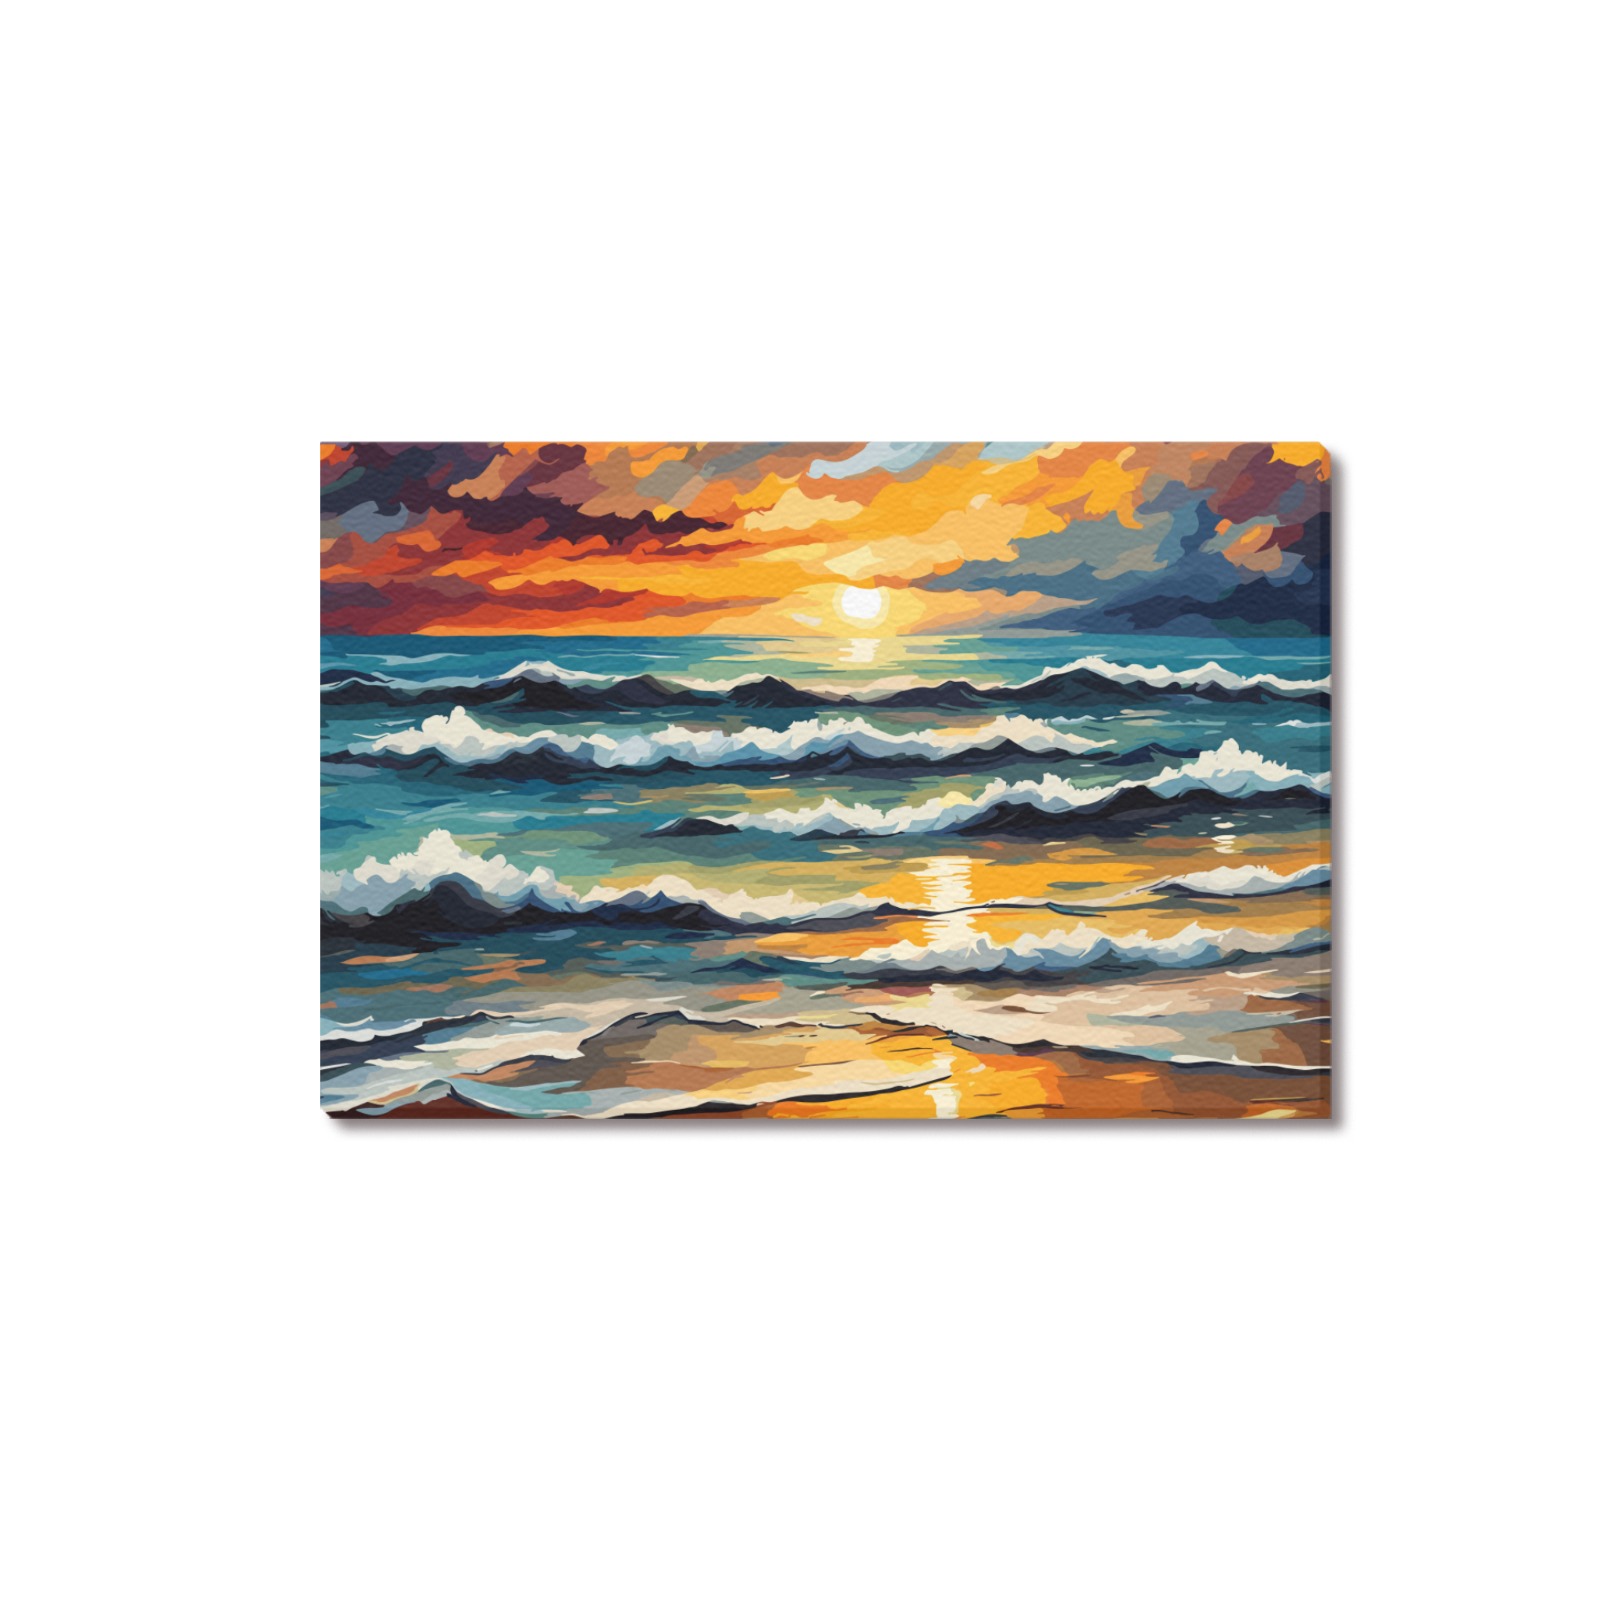 Ocean surf. Deserted beach. Setting sun. Good mood Upgraded Canvas Print 18"x12"